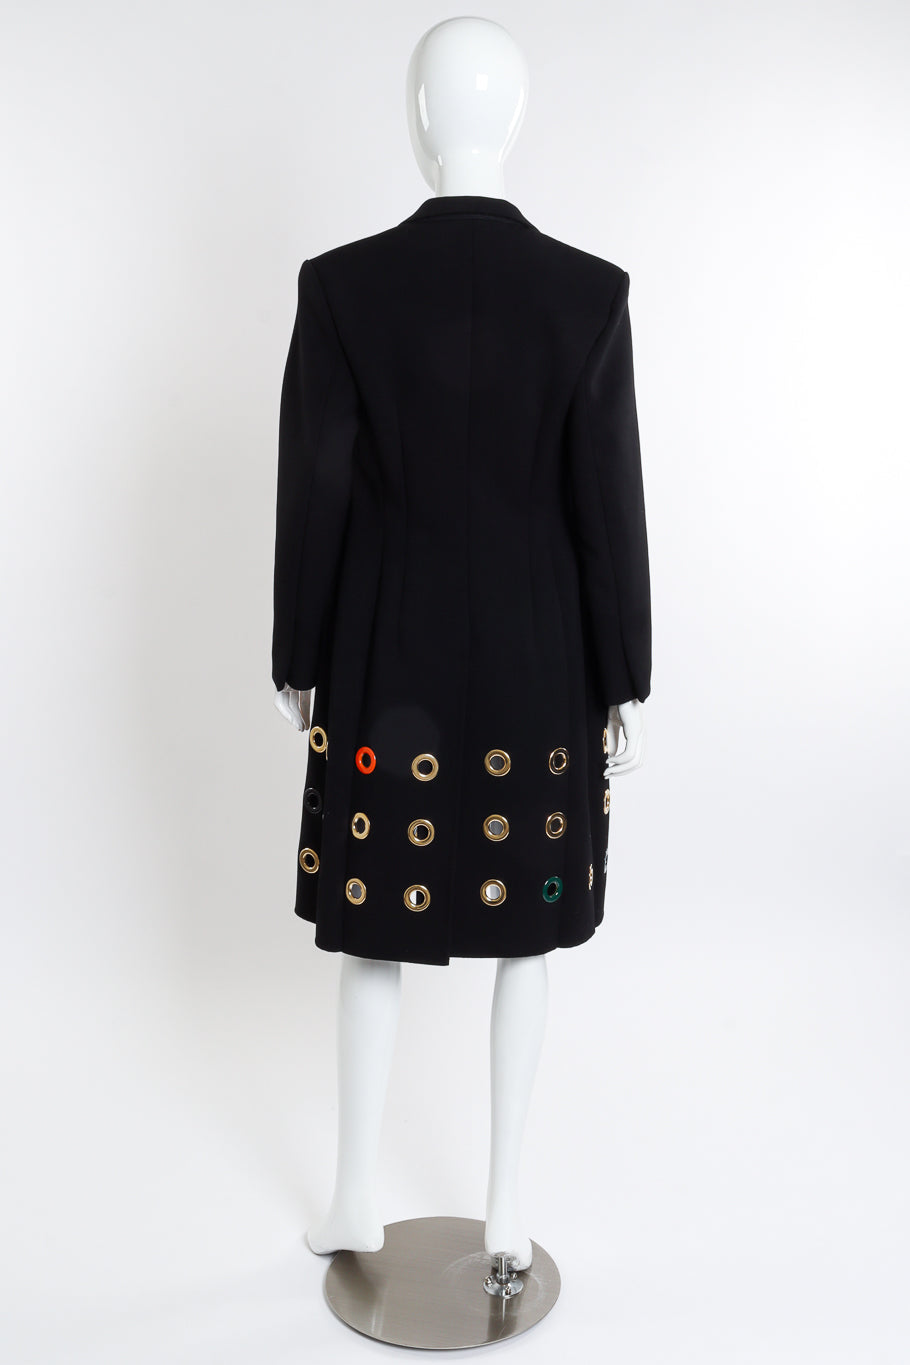 2014 S/S Eyelet Coat by Céline on mannequin back @recessla